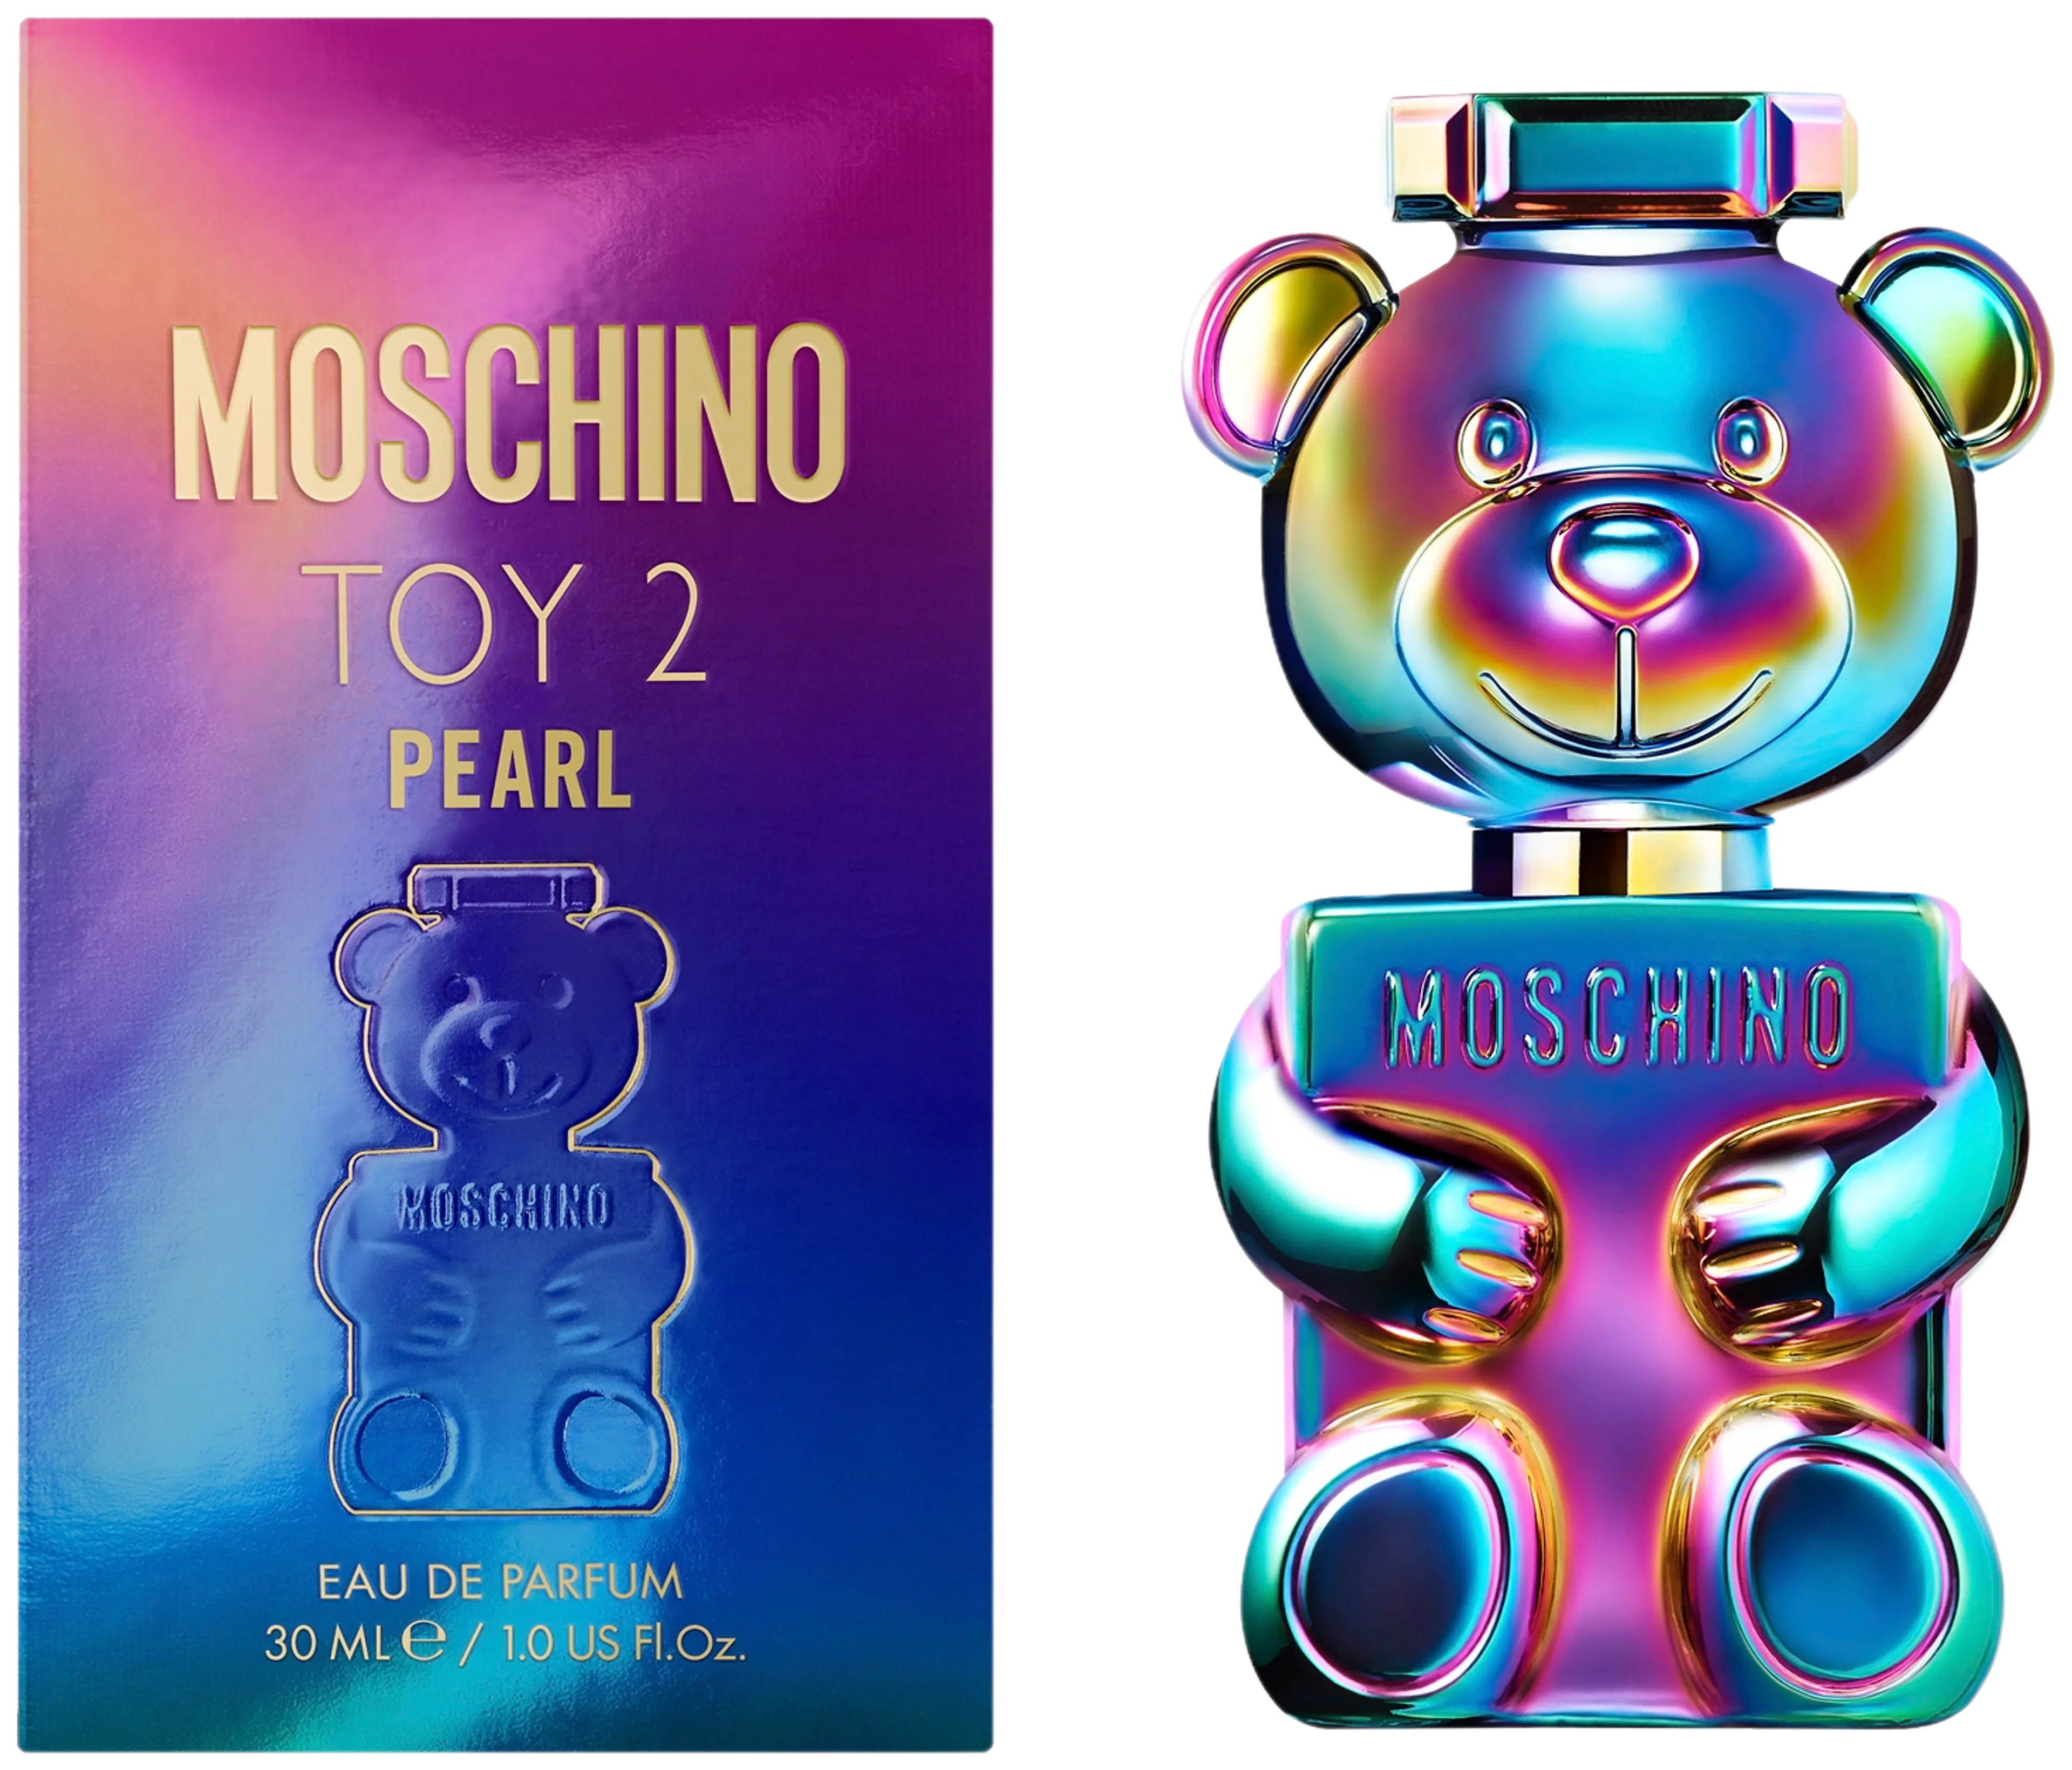 Moschino Toy 2 Pearl Eau de Parfum 30 ml